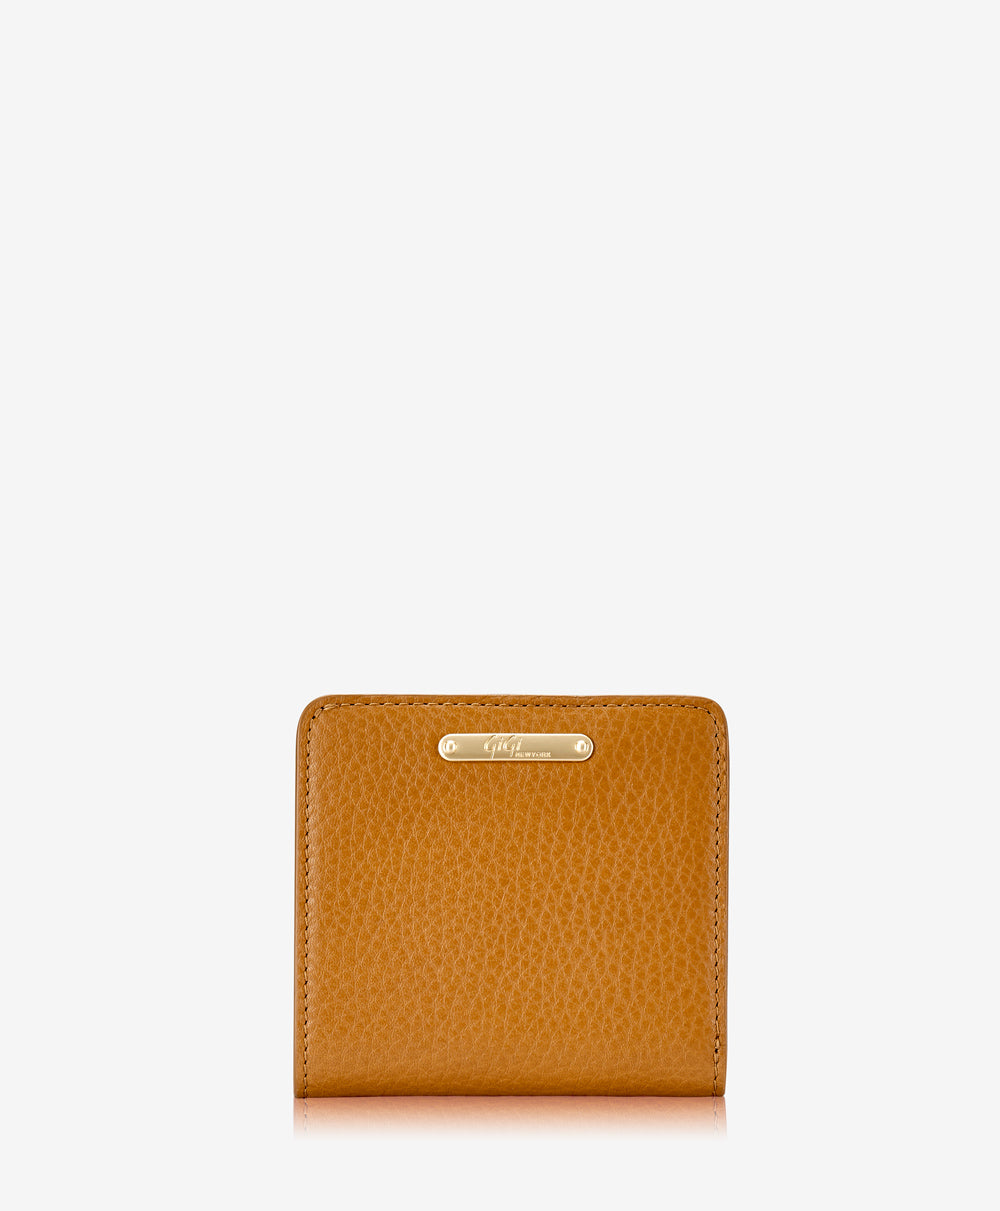 GiGi New York Mini Foldover Wallet Camel Pebble Grain Leather